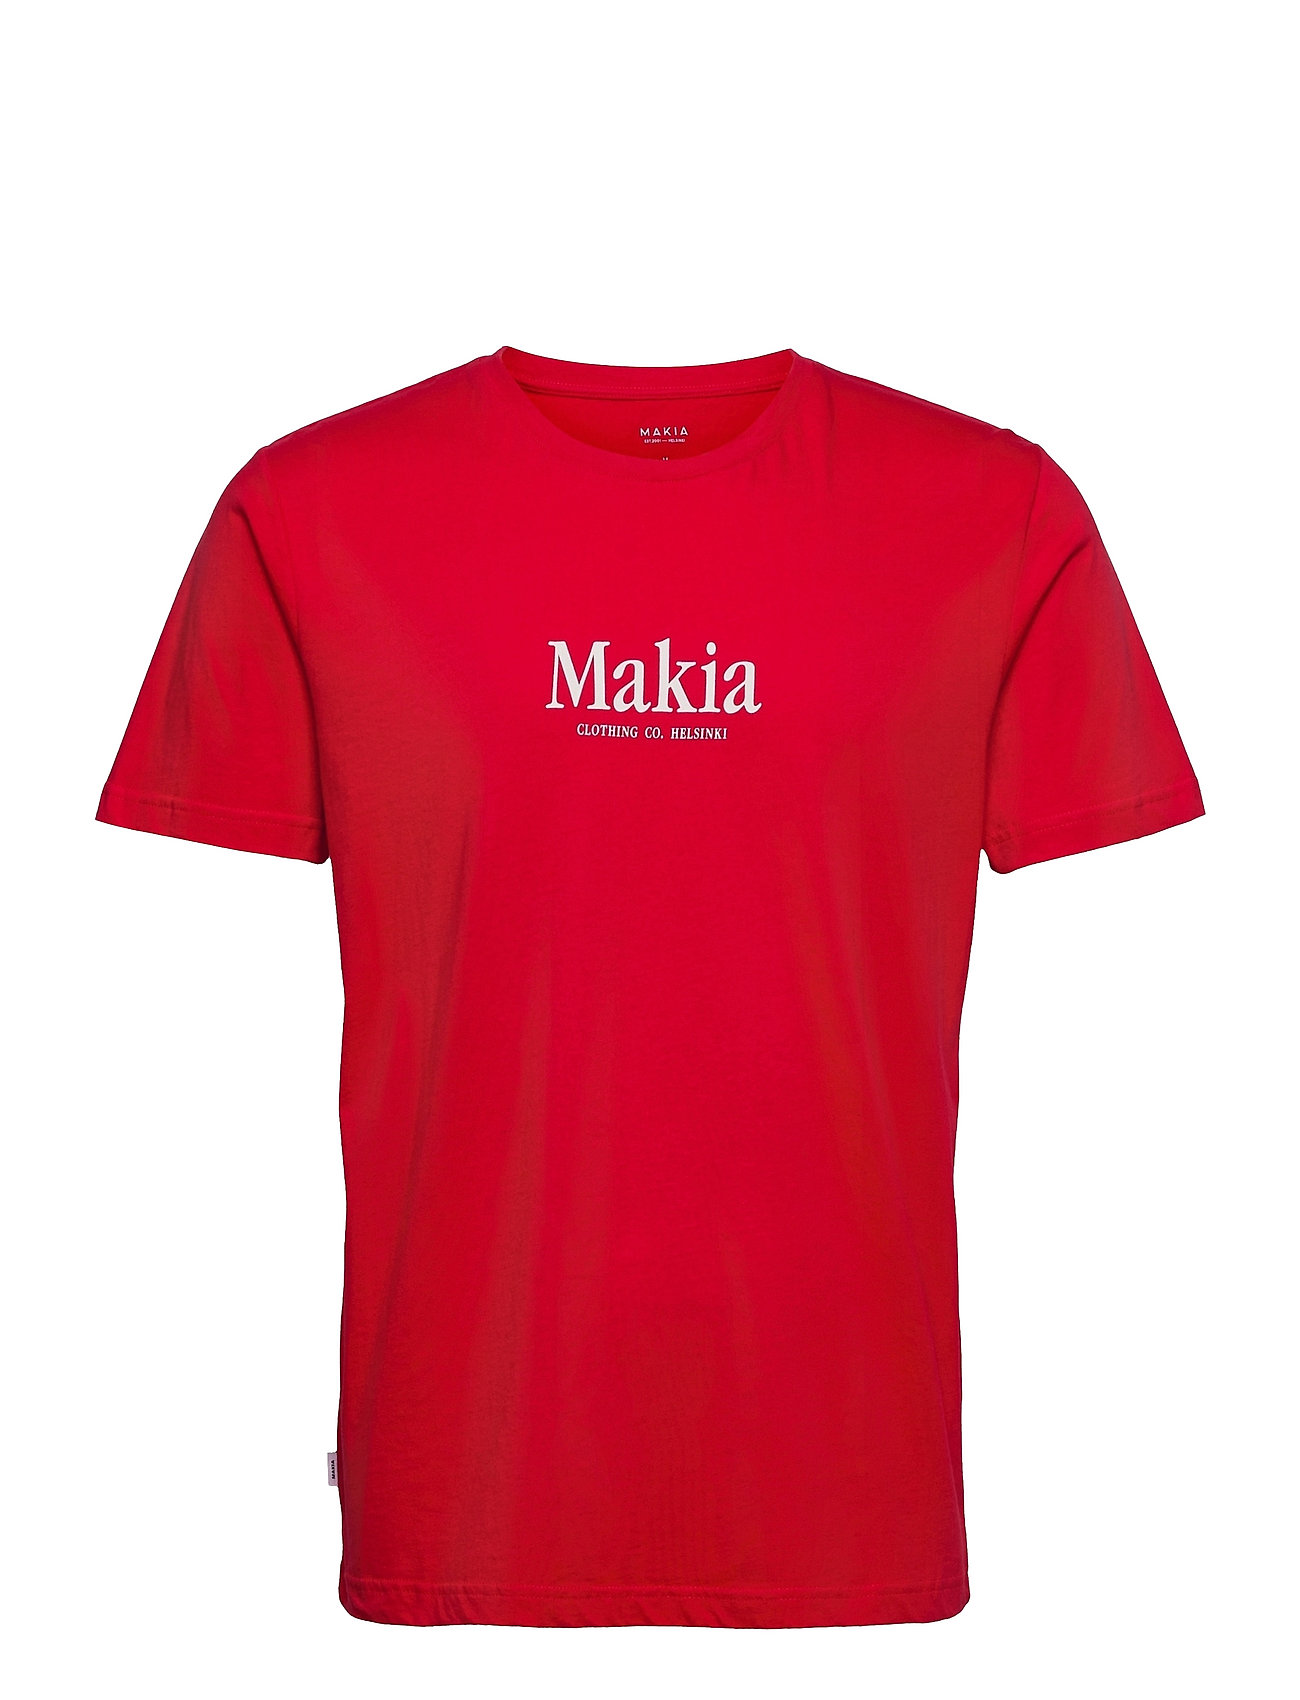 Strait T-Shirt T-shirts Short-sleeved Punainen Makia